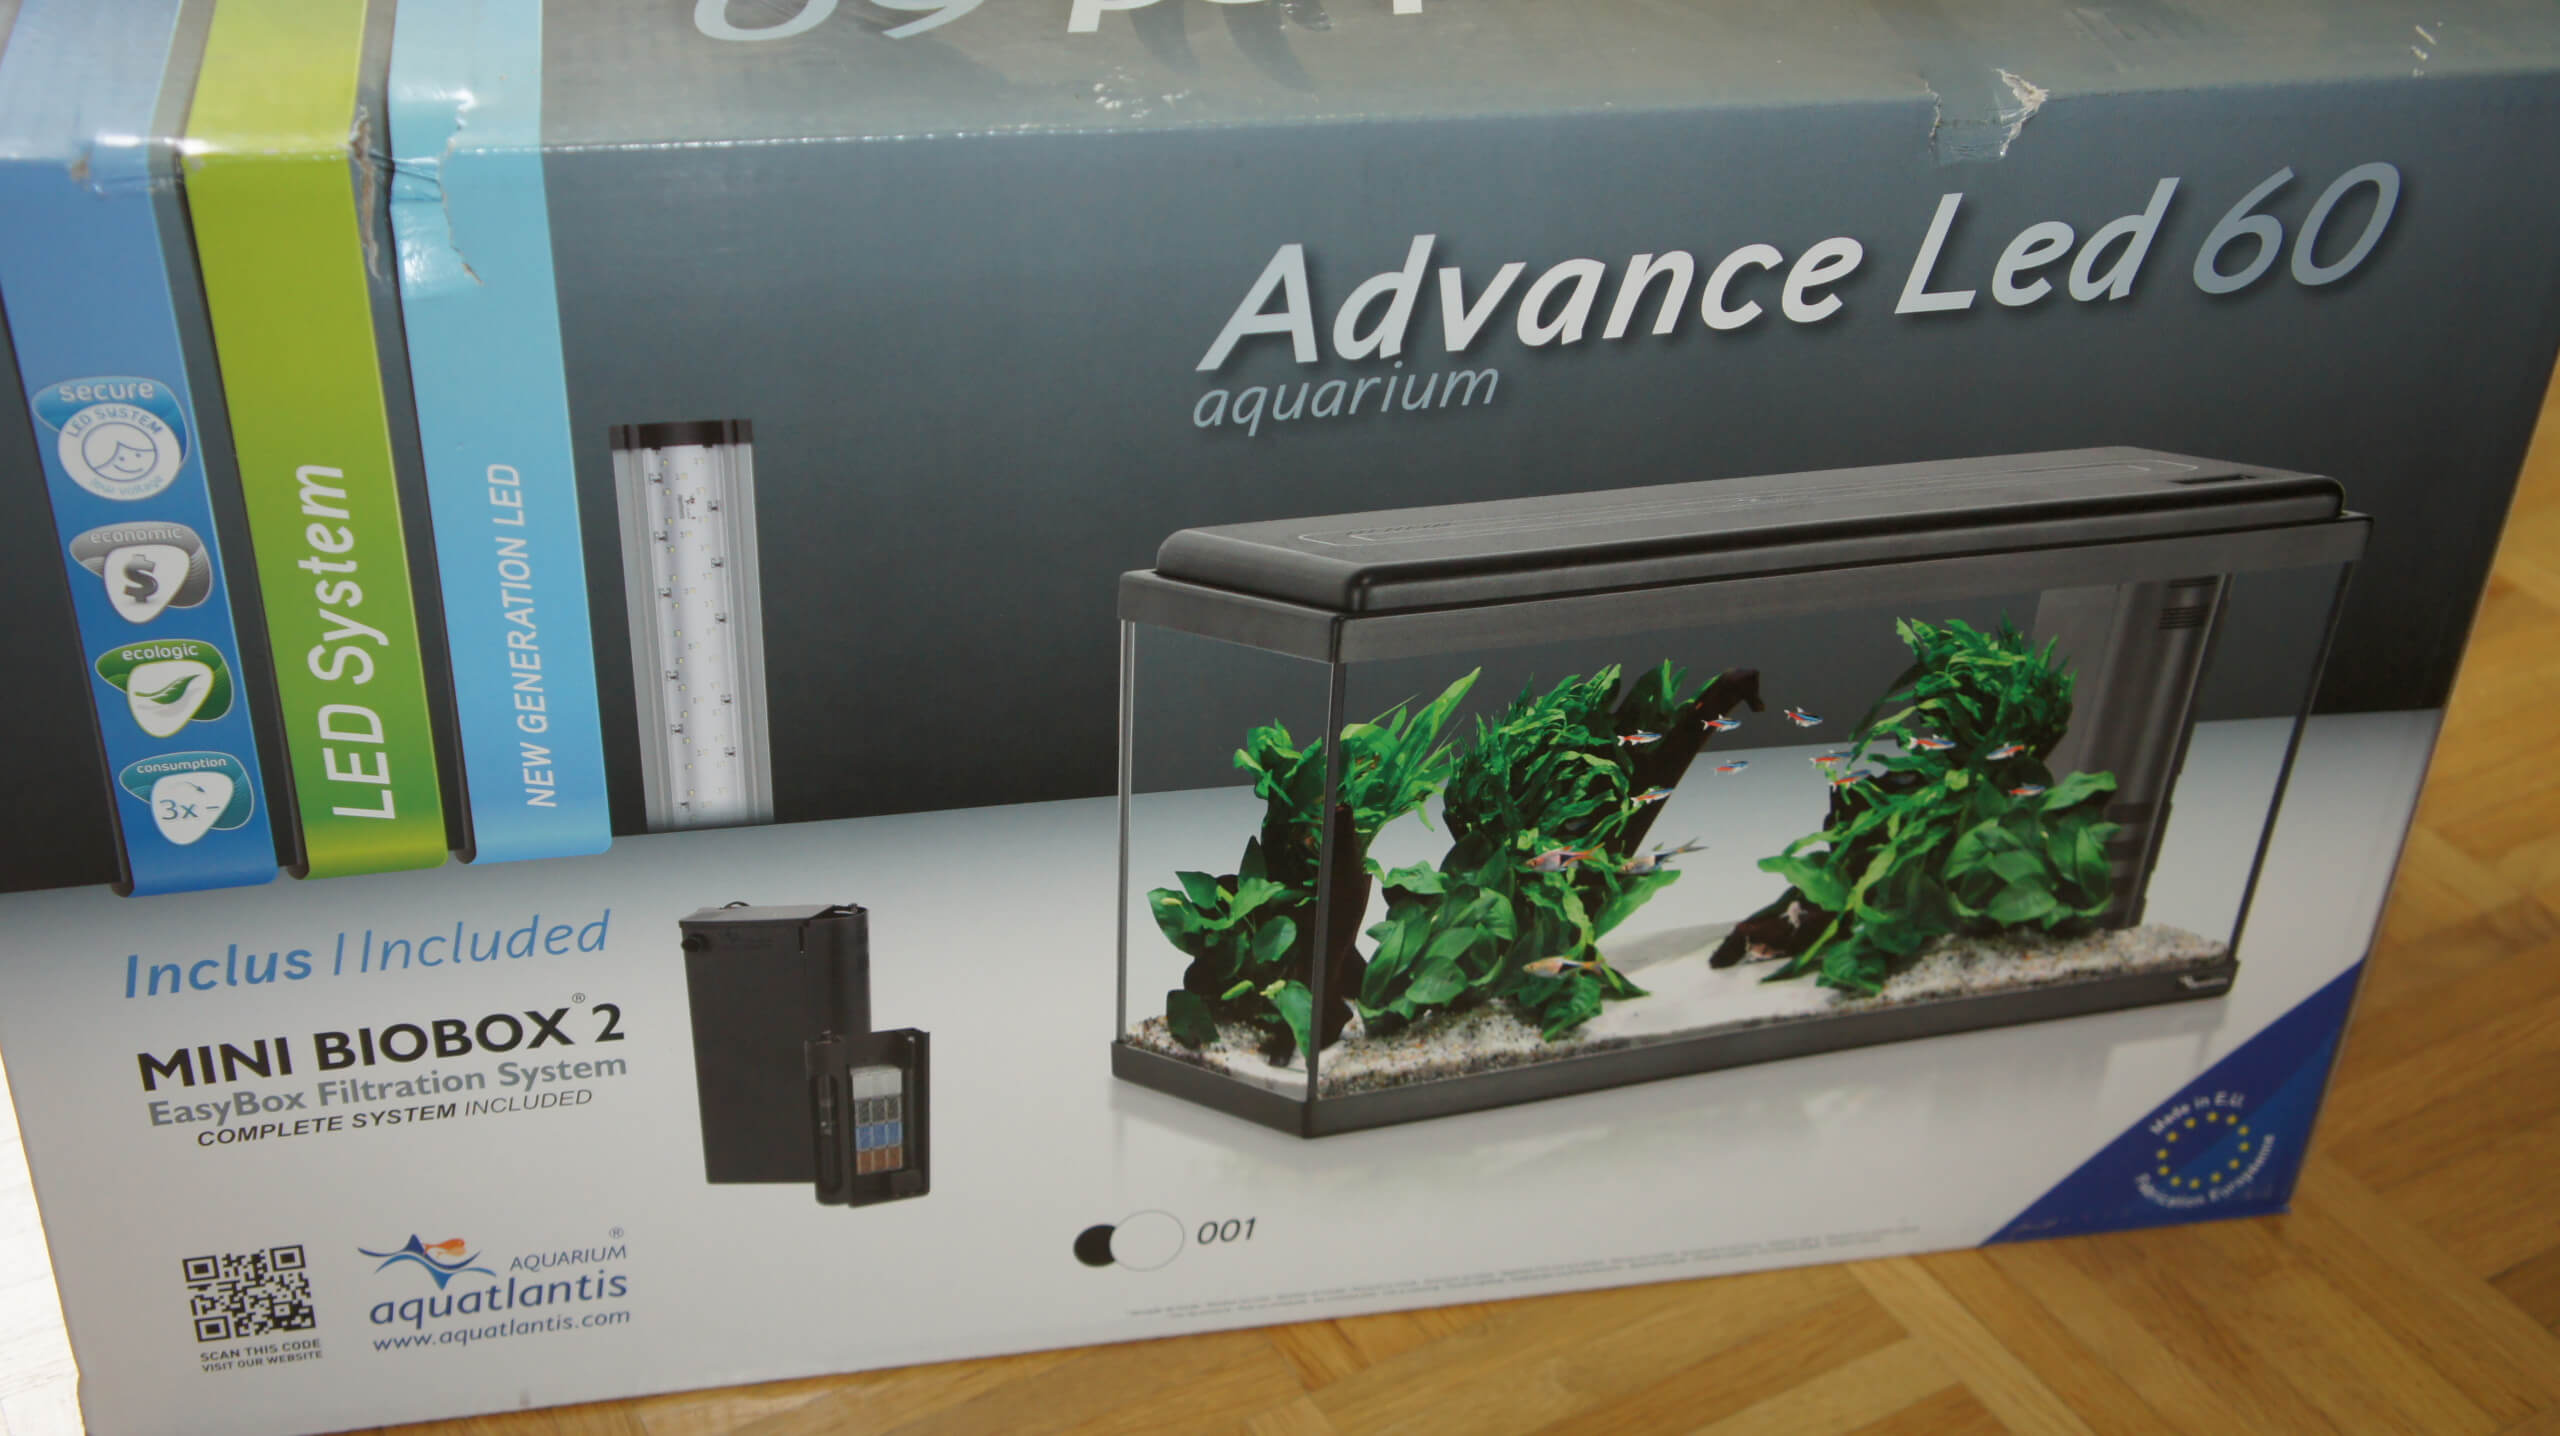 Aquatlantis Advance LED 60